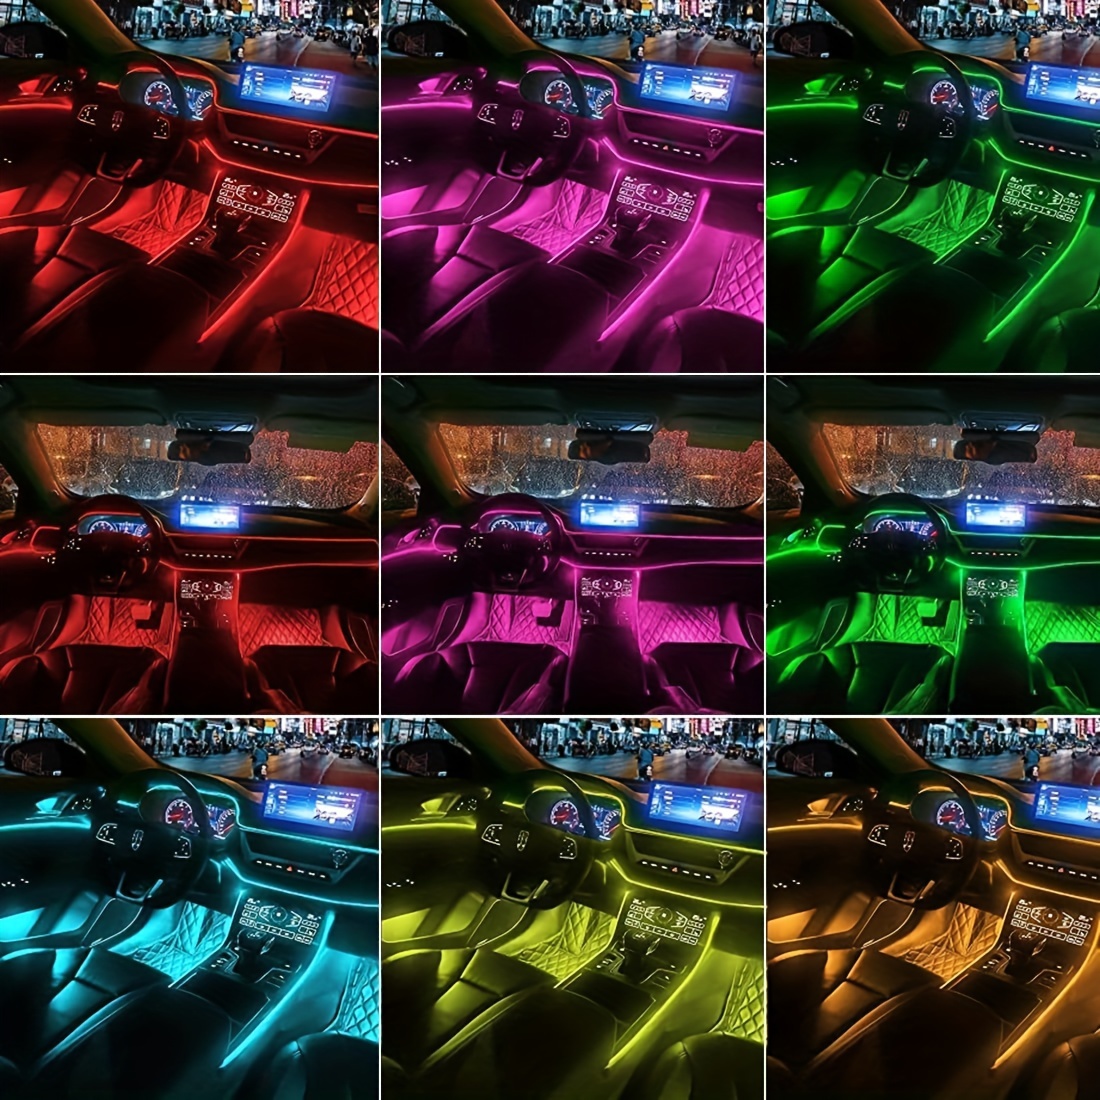 APP Control Car LED Lights, Smart Car LED Strip Lights, Interior Car Lights  with Music Mode and 16 Million Colors, Under Dash Lighting Kit for Cars